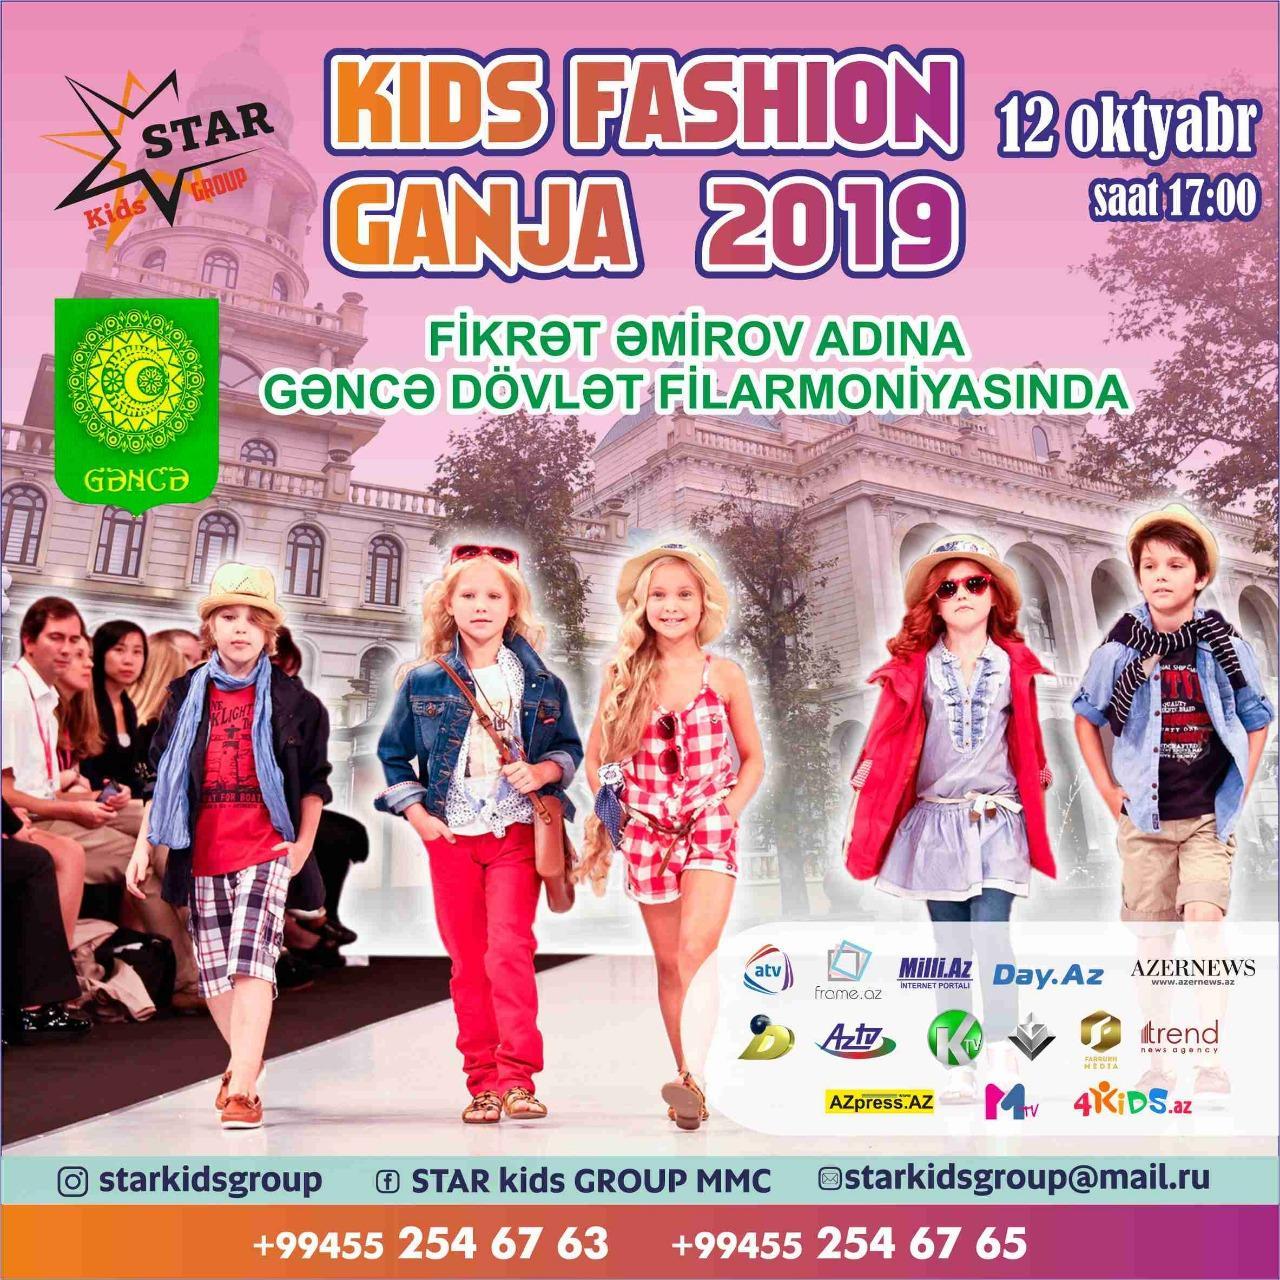 Kids Fashion 2019 to be held in Ganja [VIDEO]